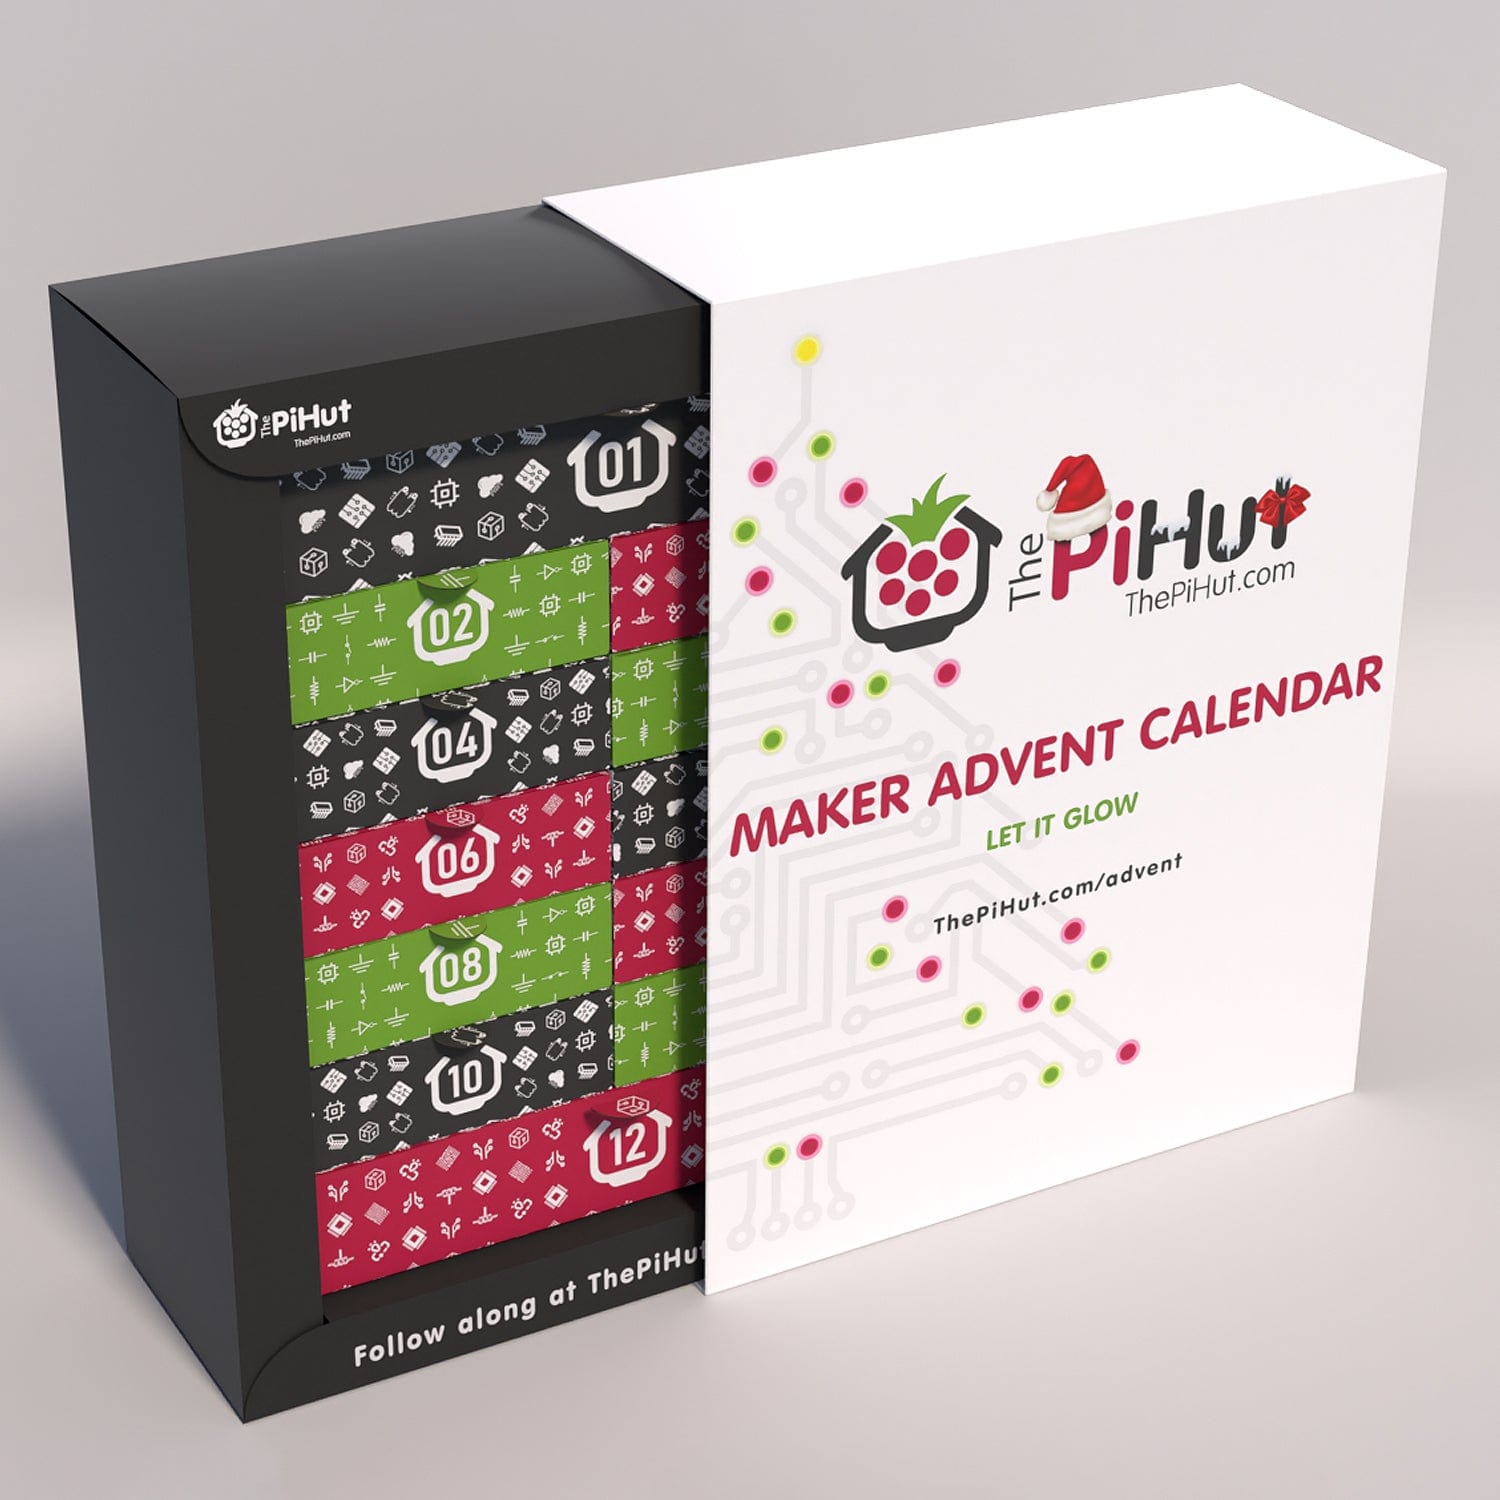 Maker Advent Calendar Let it Glow (inc. Raspberry Pi Pico H) The Pi Hut